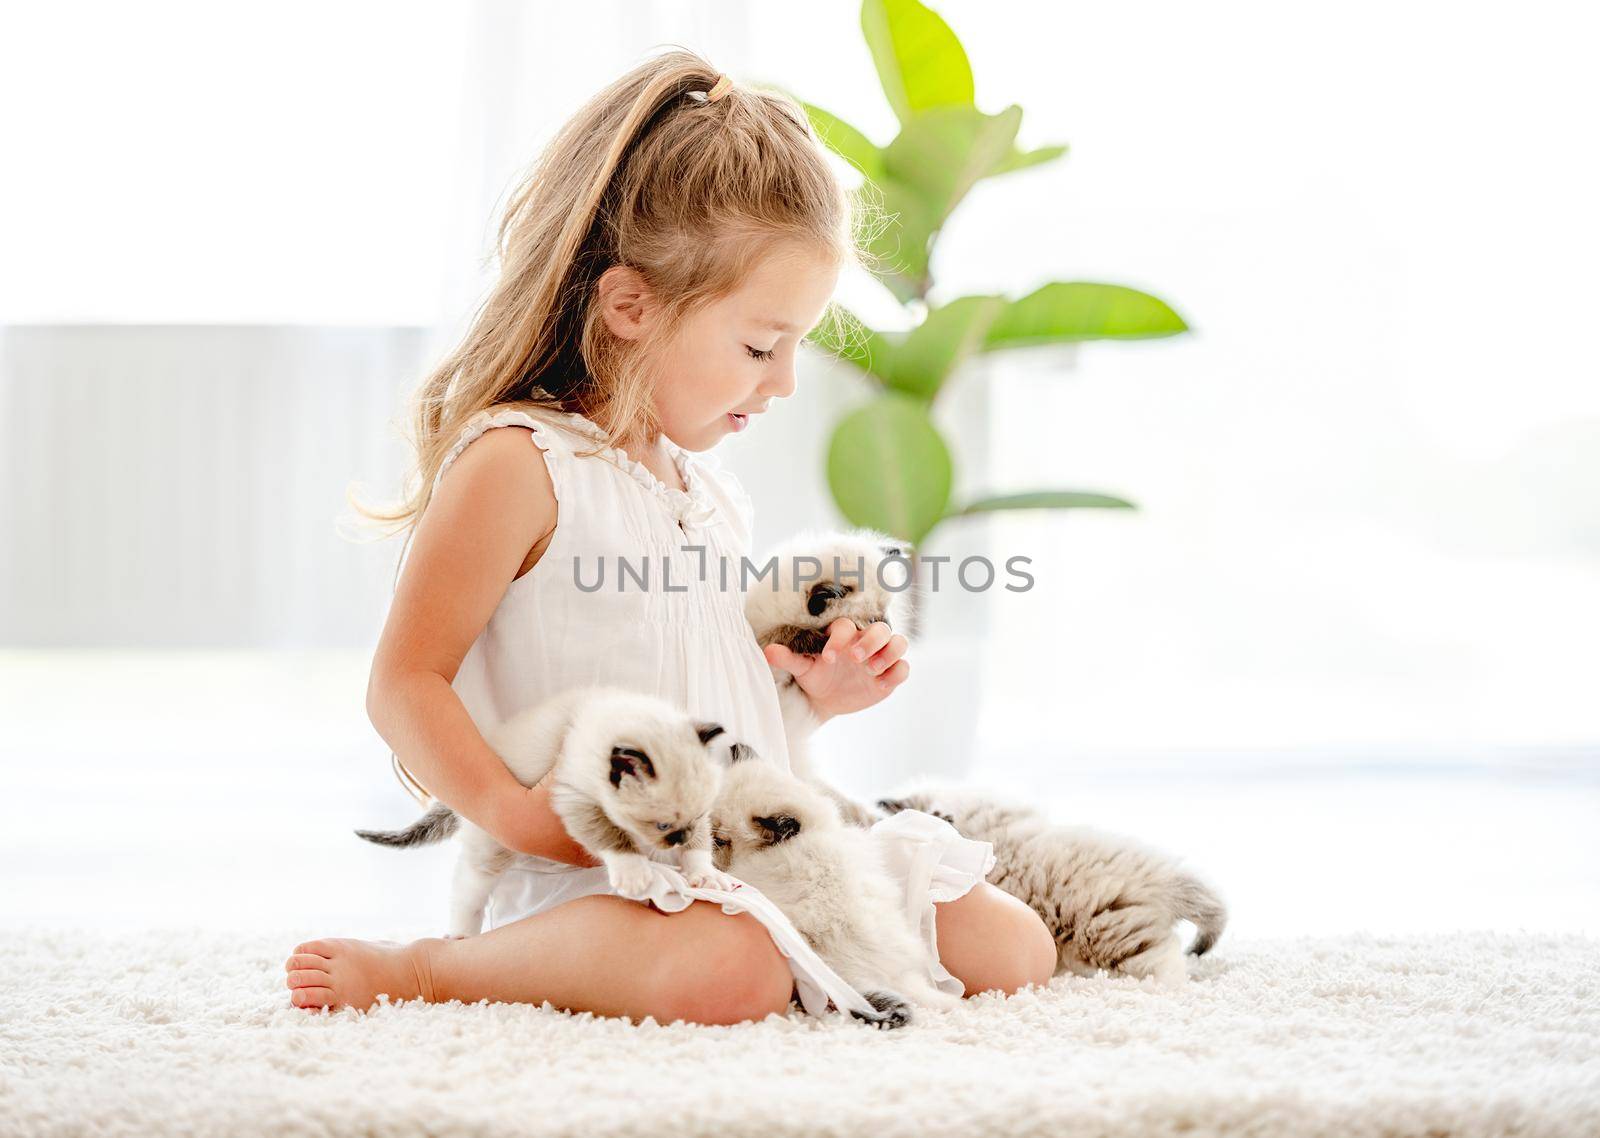 Girl with ragdoll kittens by tan4ikk1